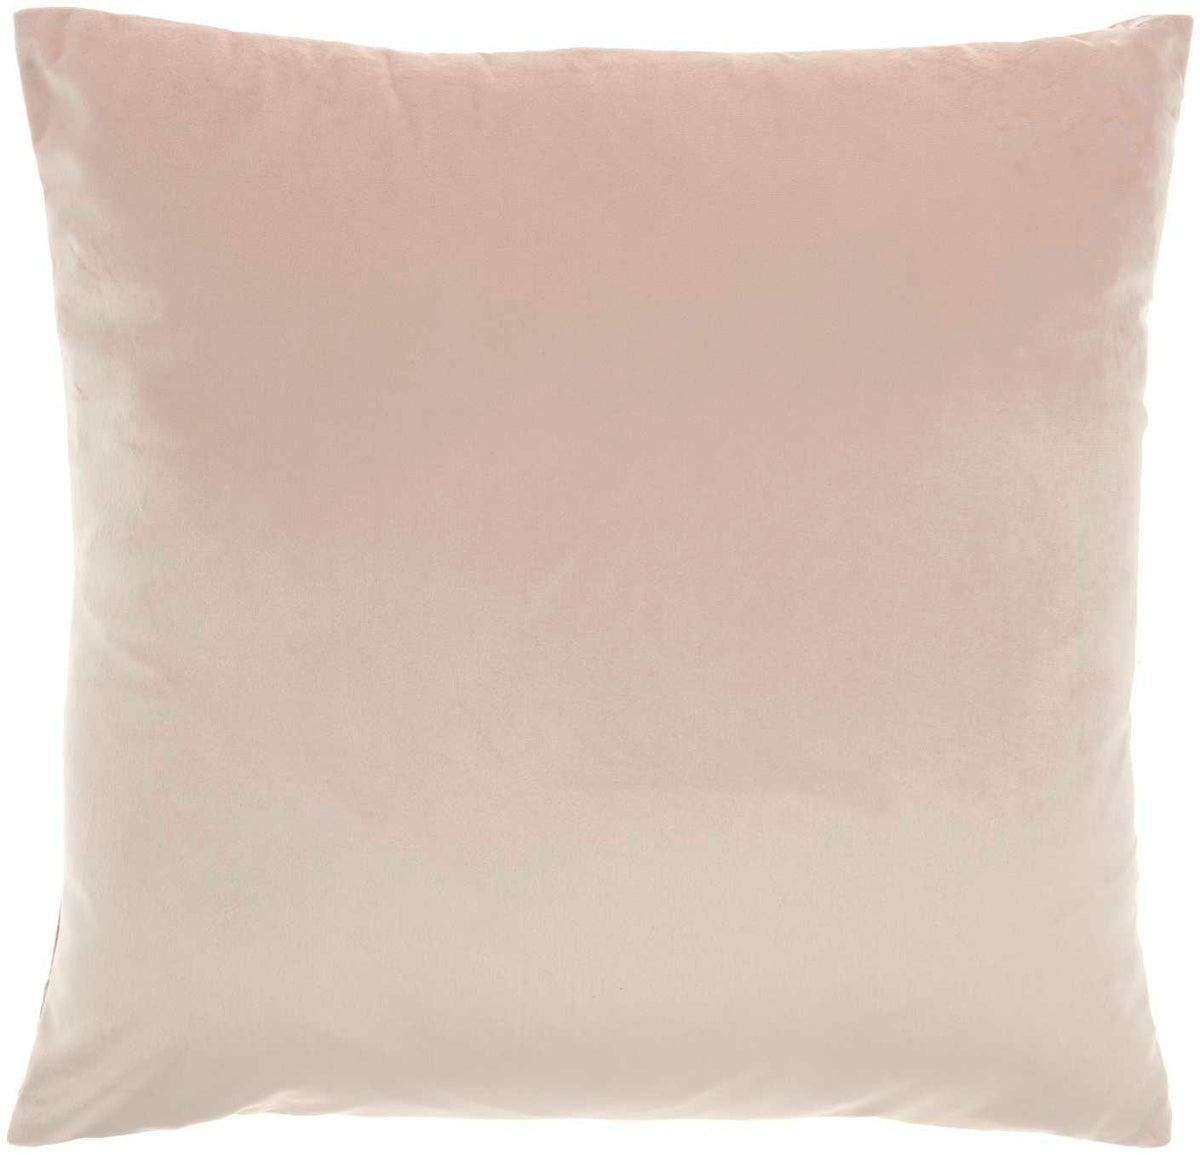 Ravenna 18" x 18" Blush Throw Pillow - Elegance Collection